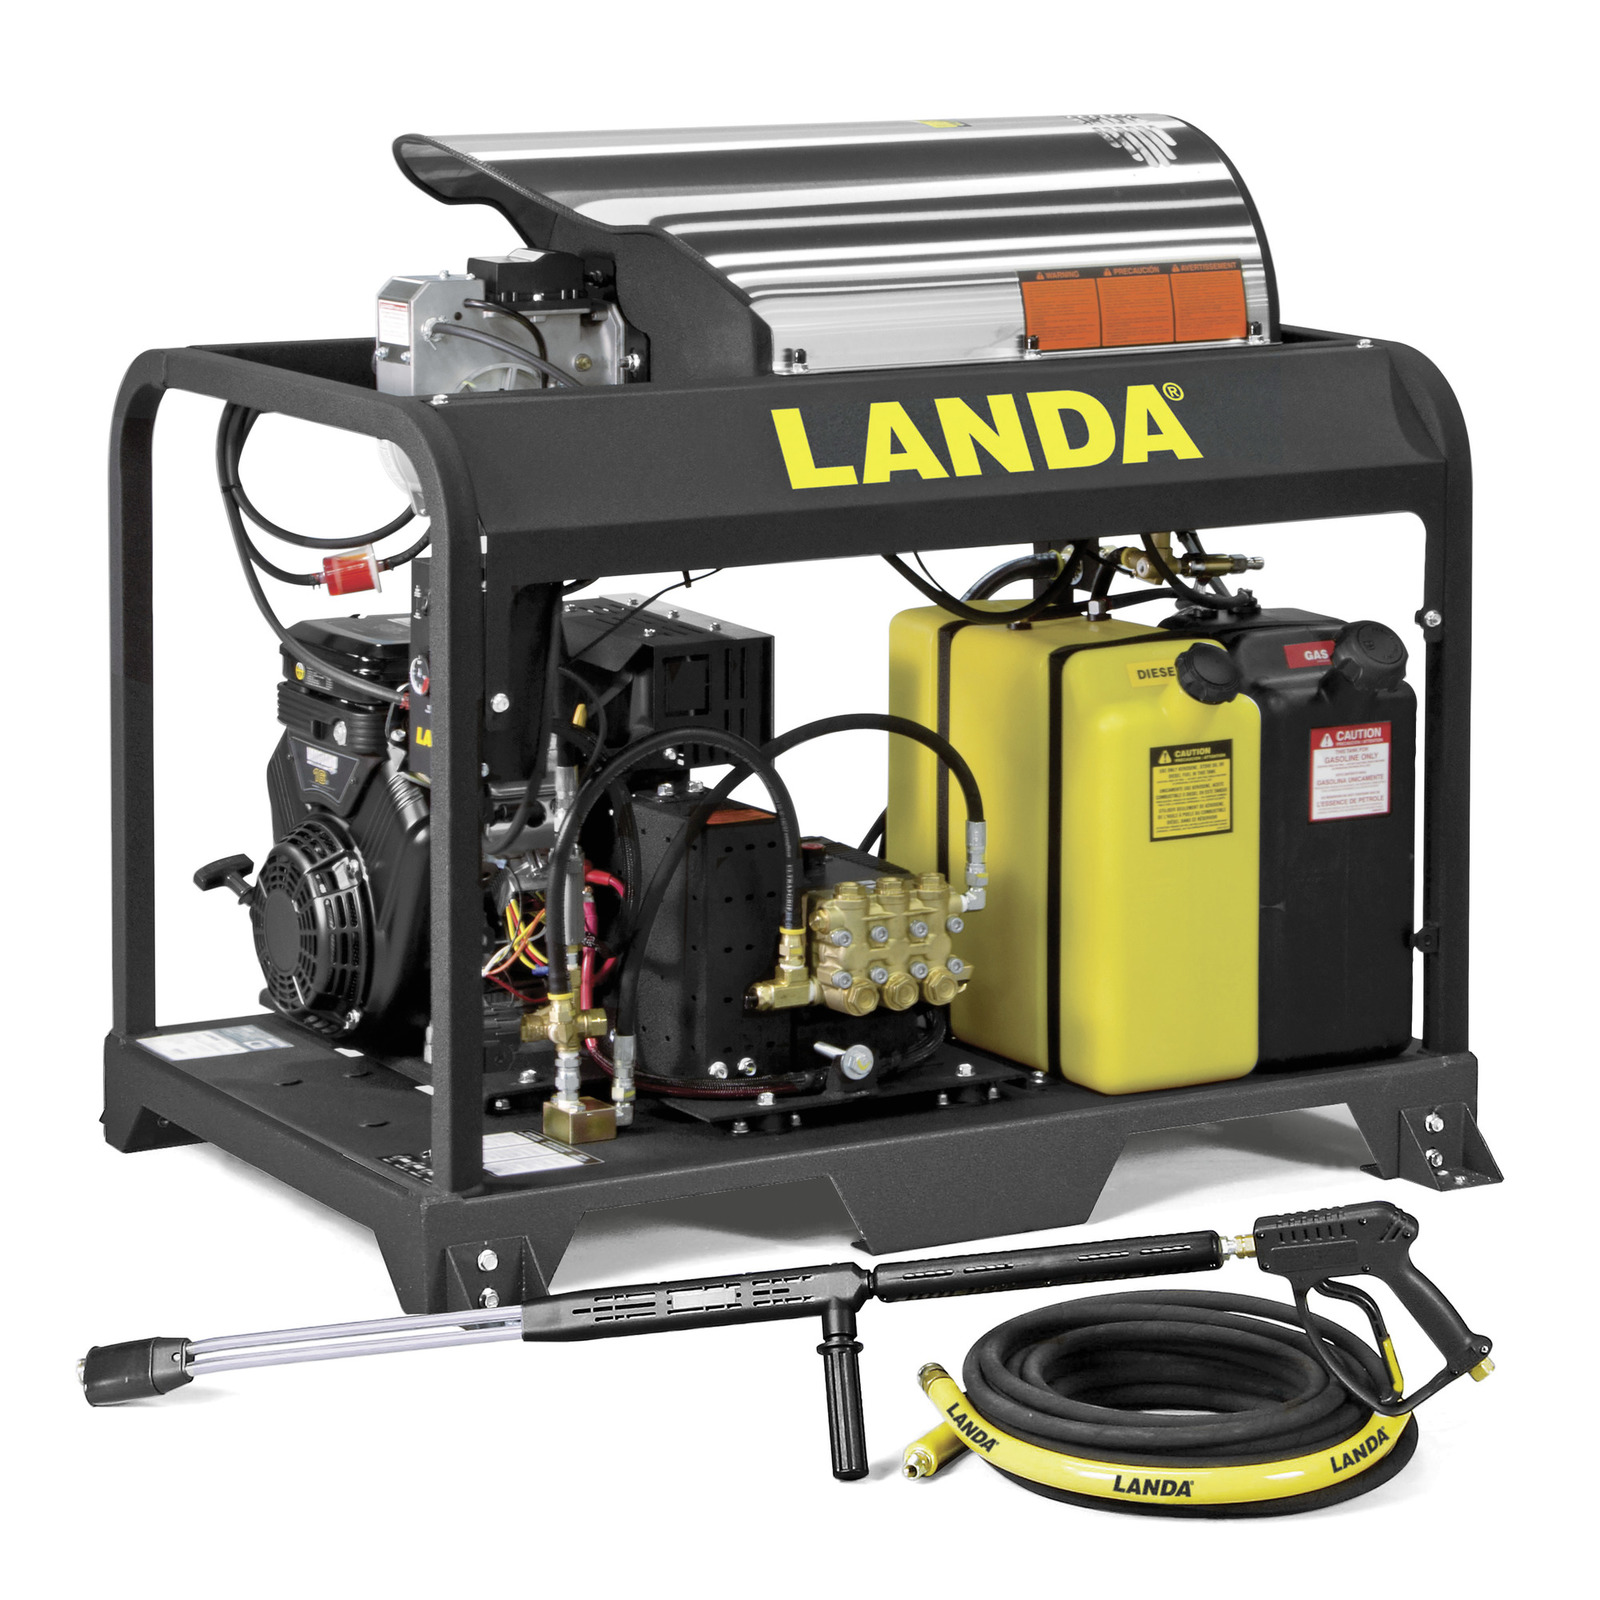 Landa Industrial Hot Water Pressure Washer Dealer